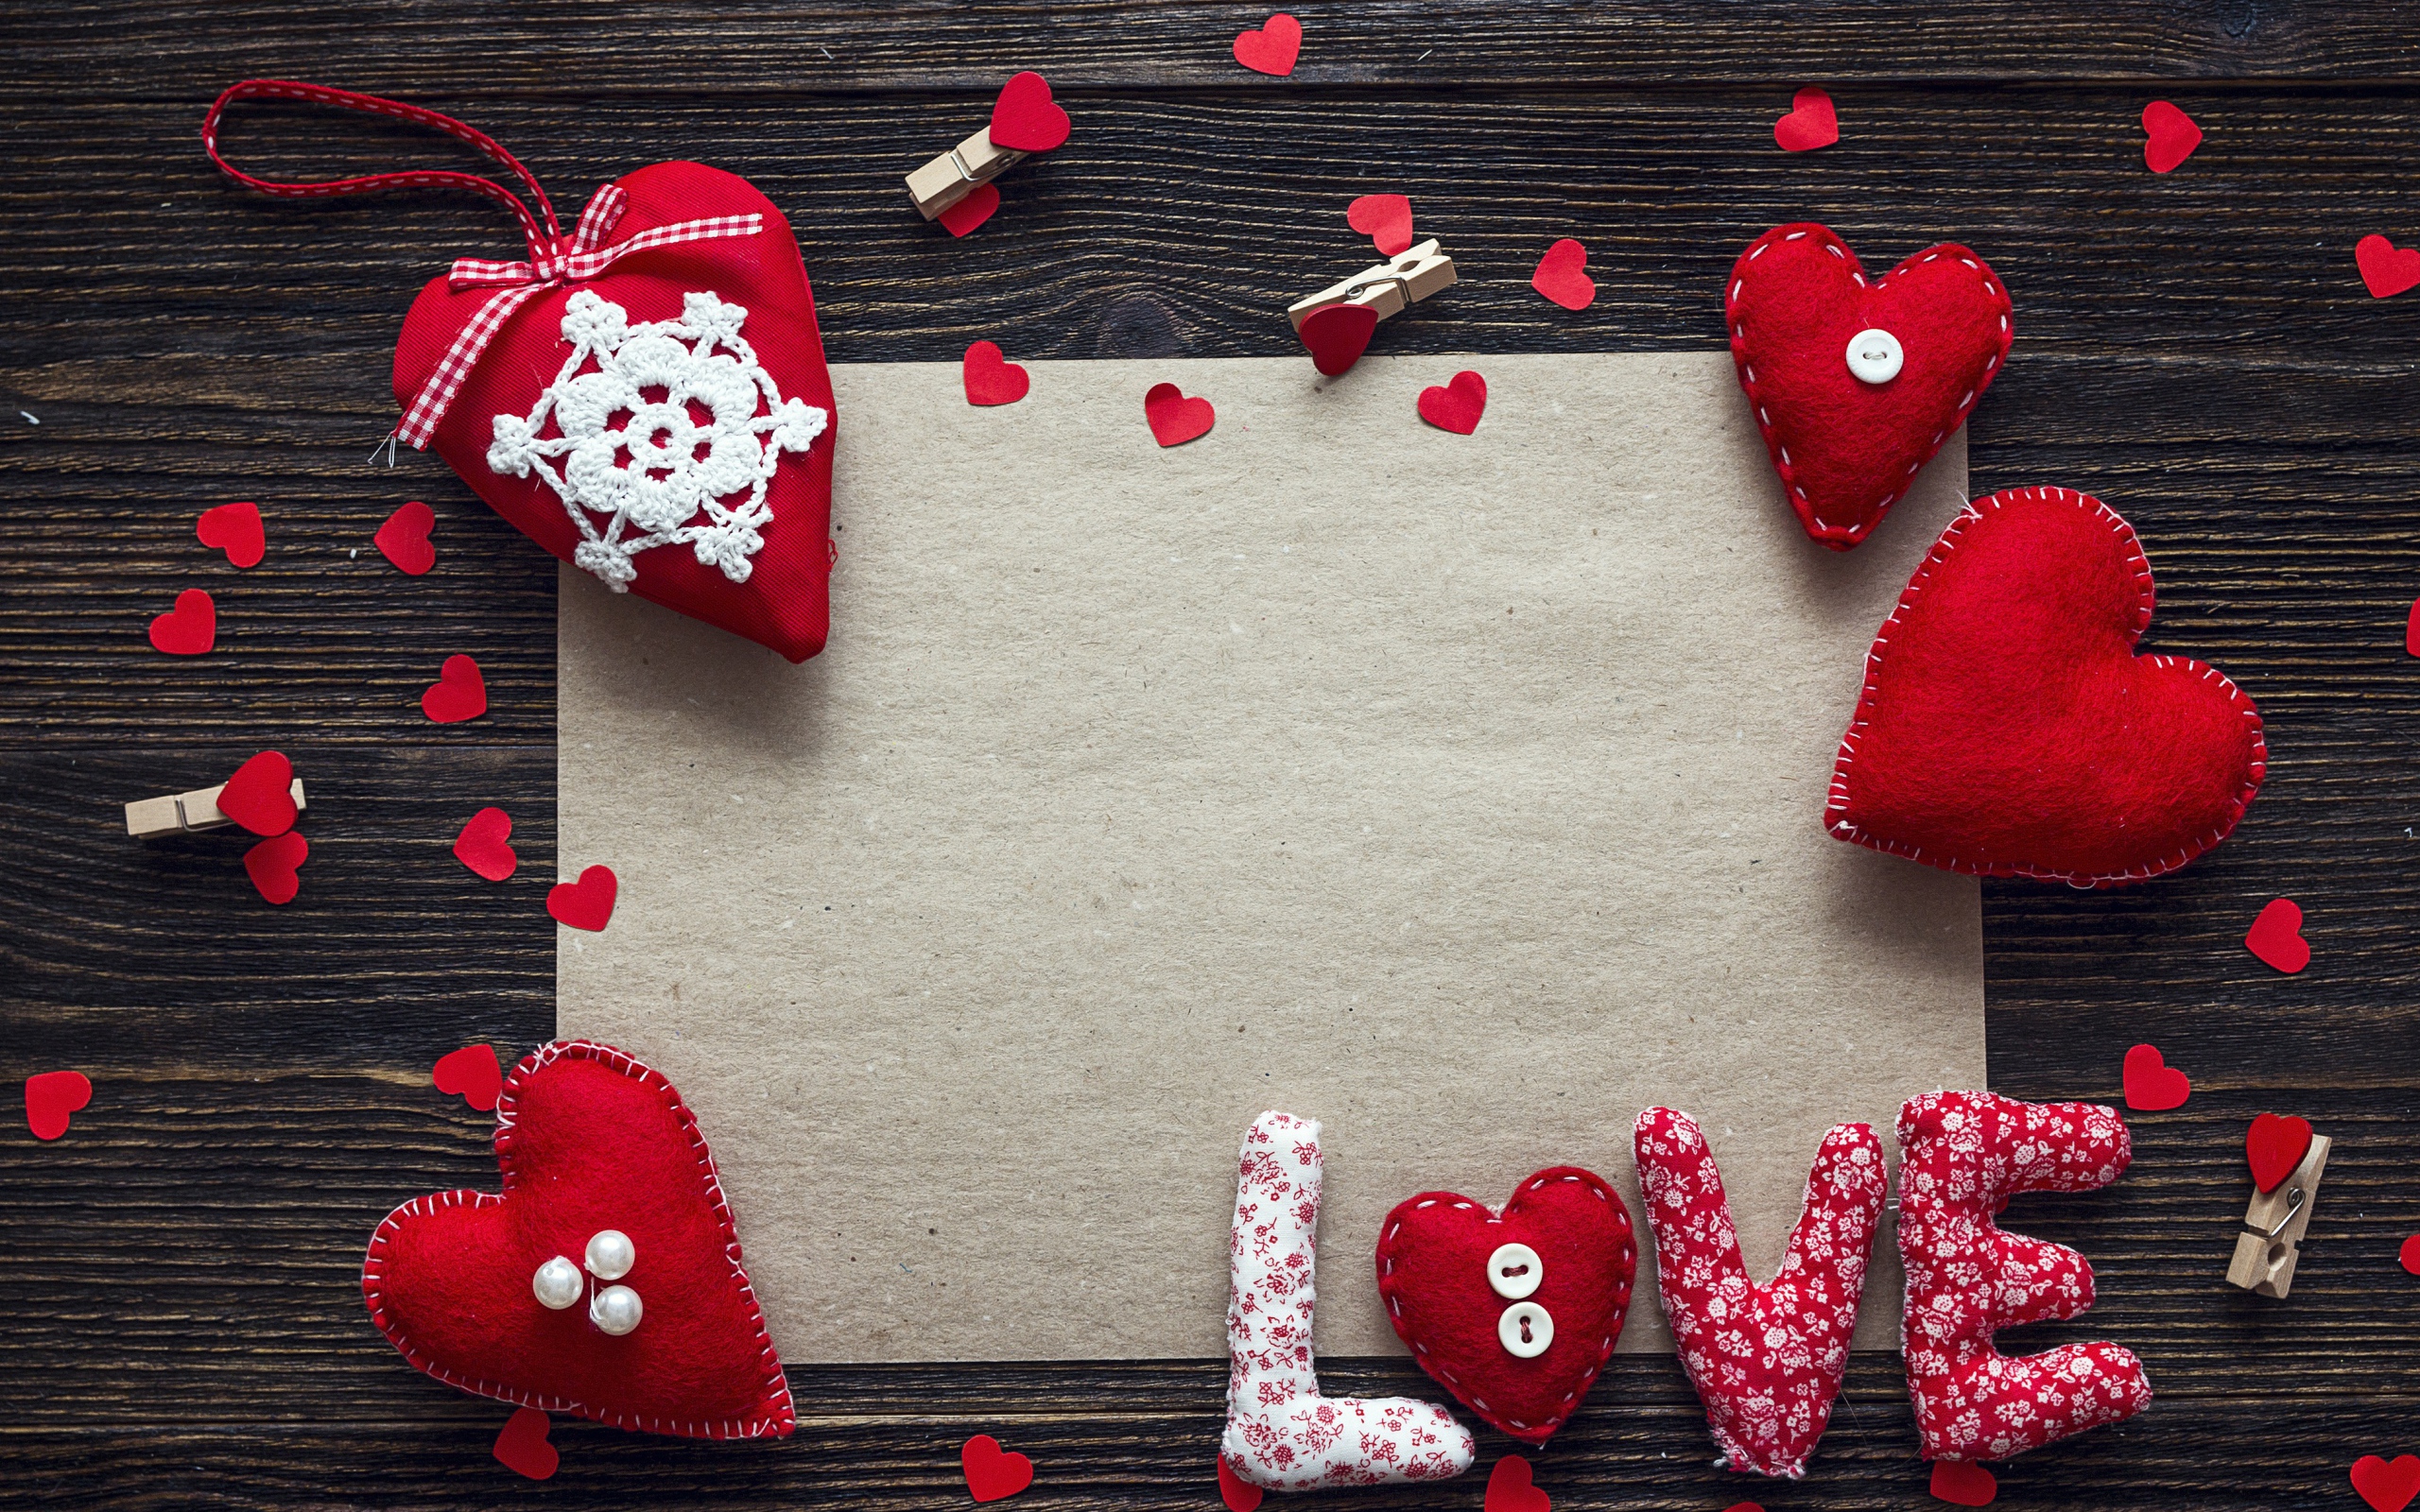 Шаблон для любовной открытки с сердечками на столе